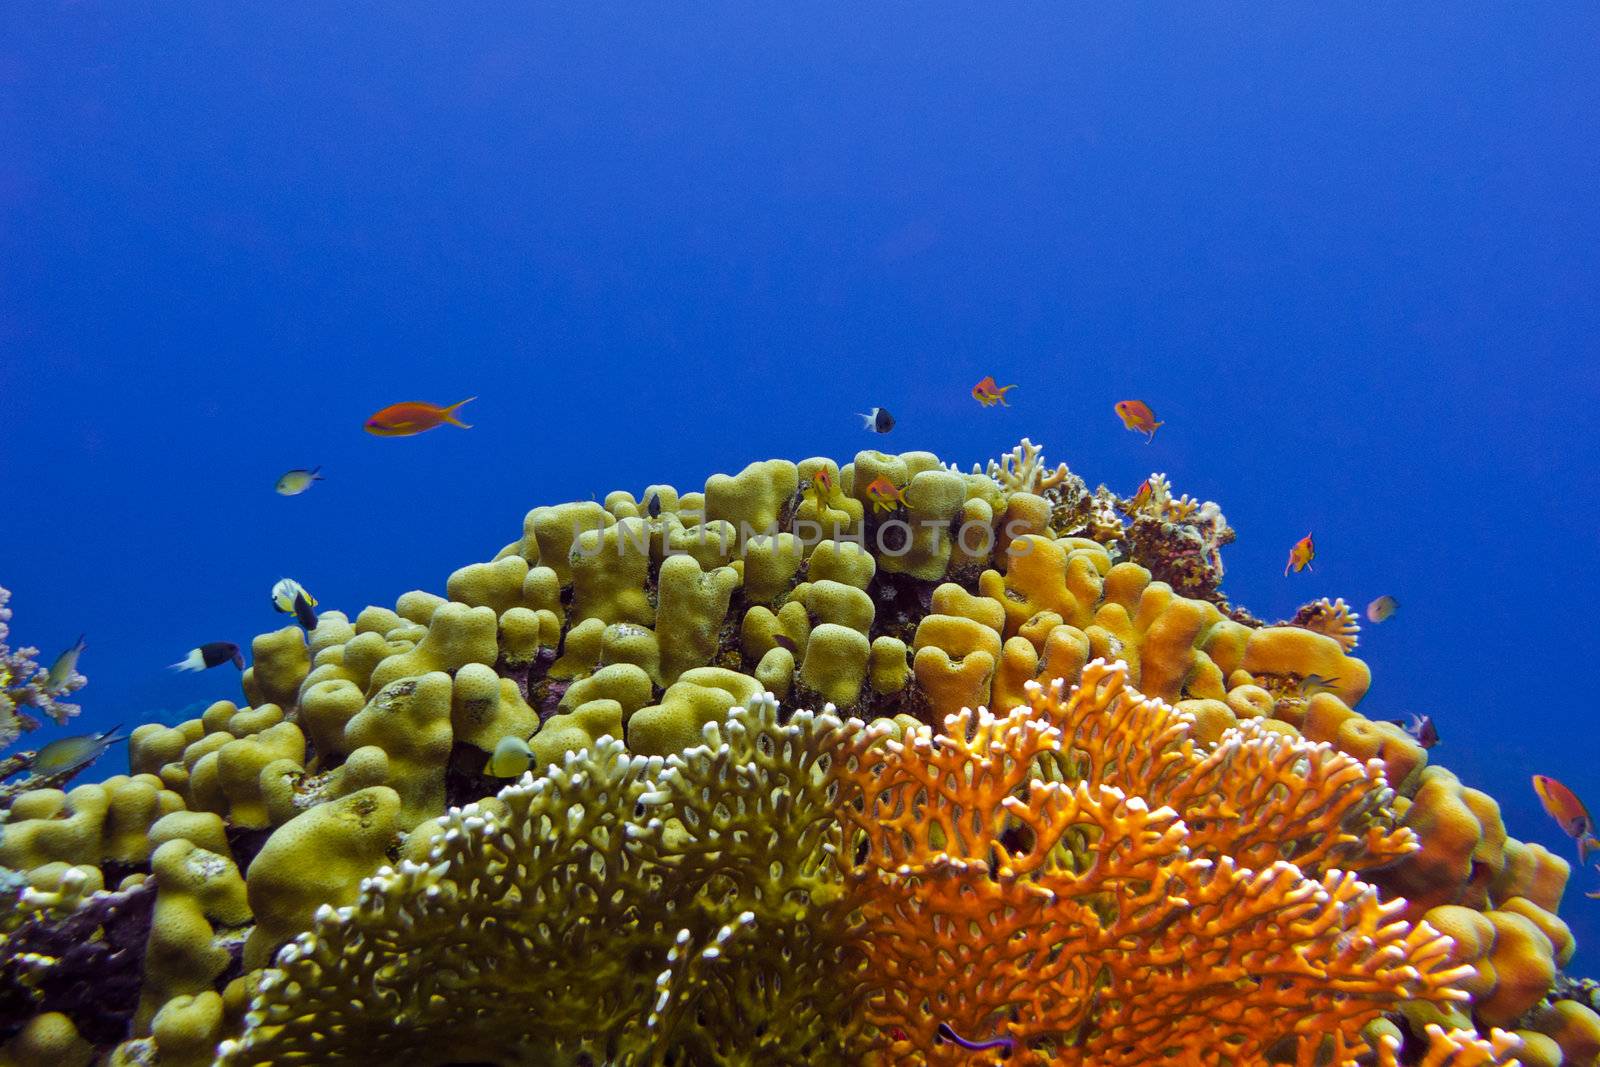 beautiful yellow hard coral at the bottom of tropical sea